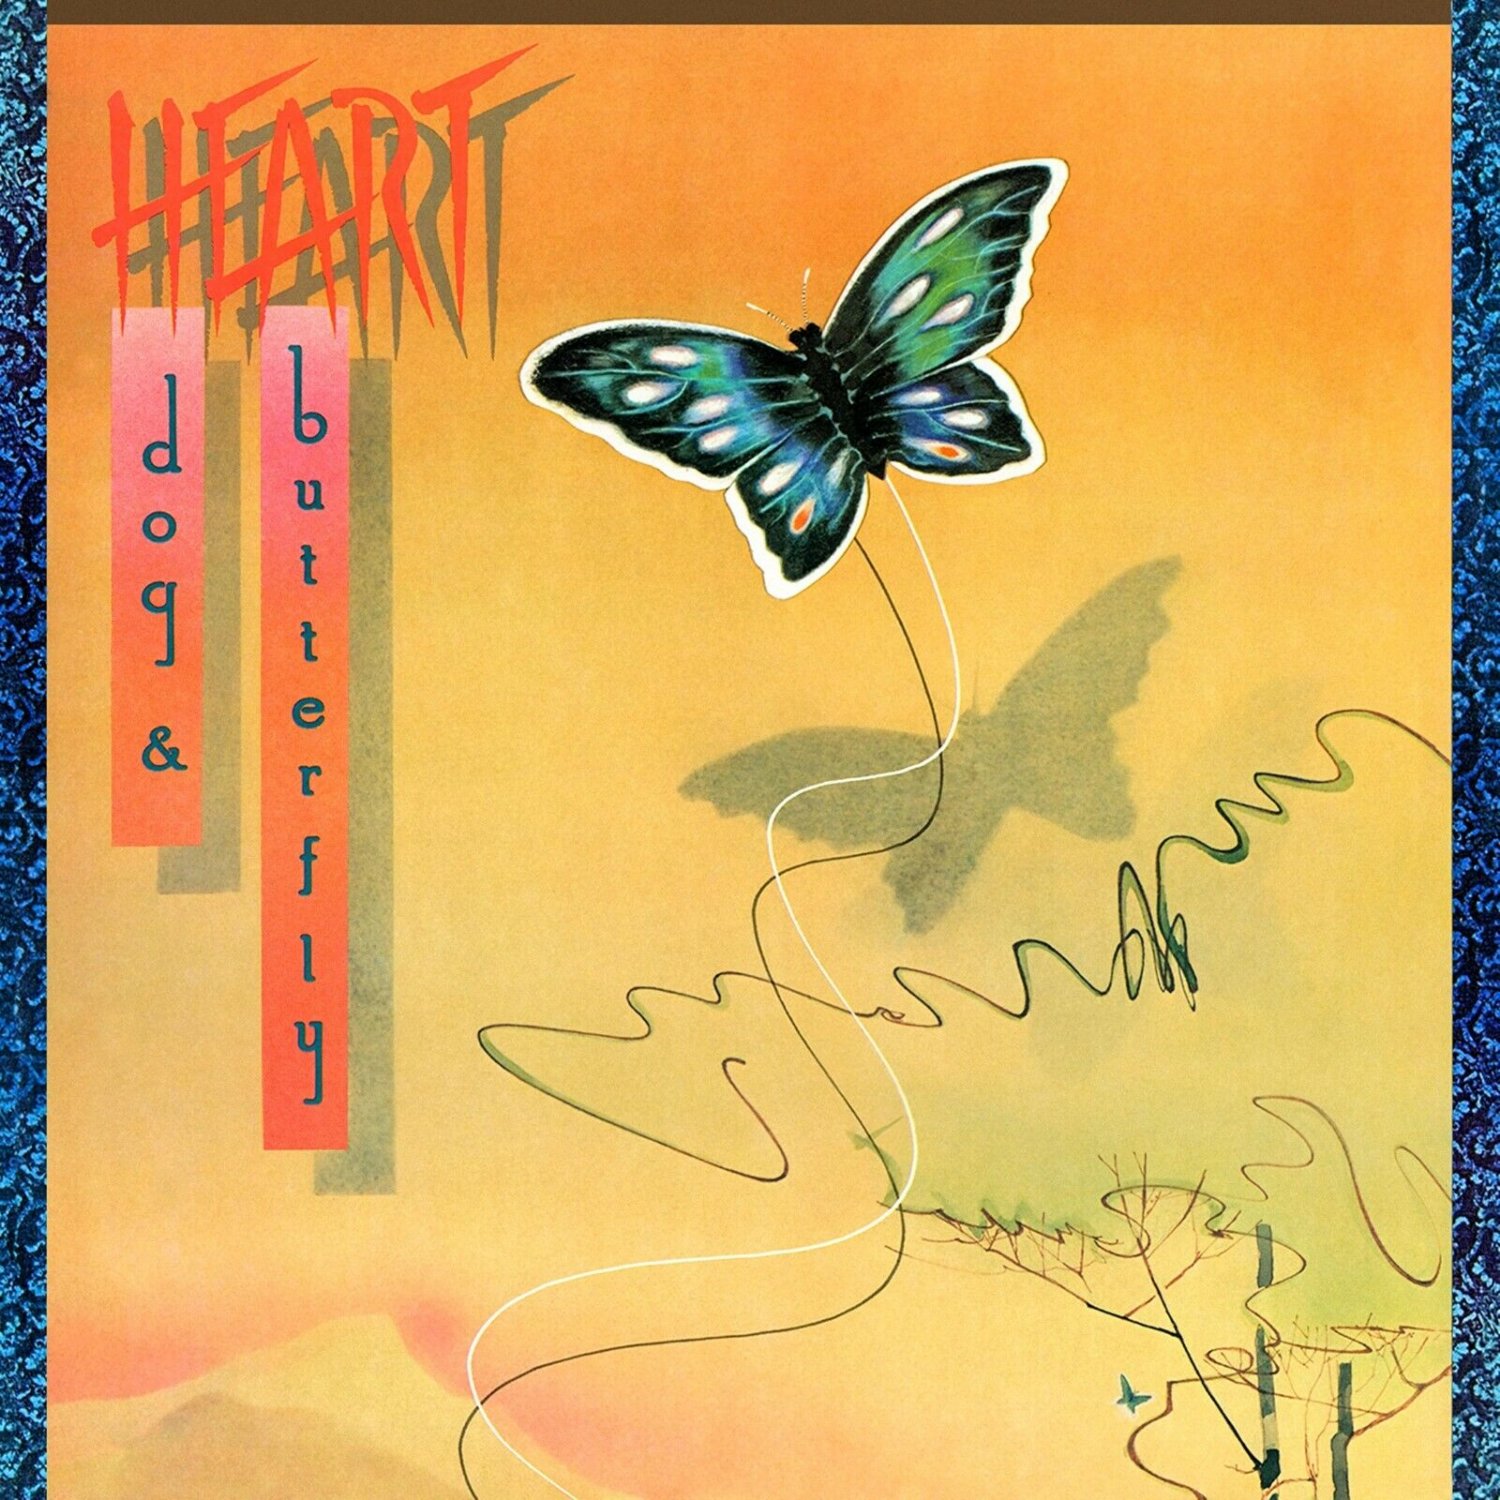 HEART Dog & Butterfly BANNER 2x2 Ft Fabric Poster Tapestry Flag album cover art